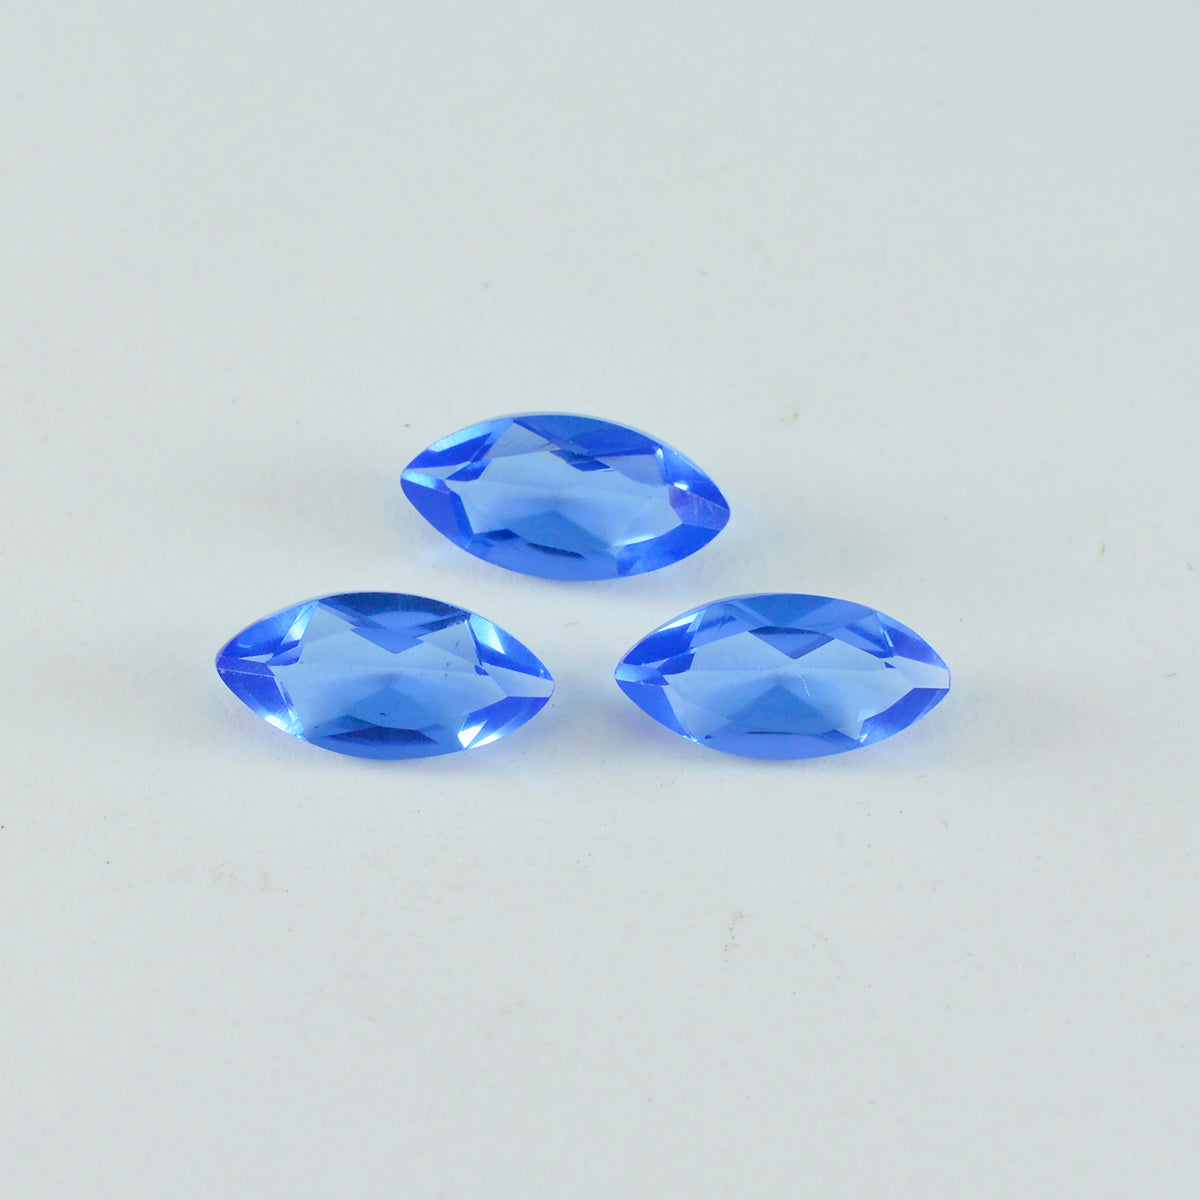 Riyogems 1PC Blue Sapphire CZ Faceted 7x14 mm Marquise Shape beauty Quality Gems